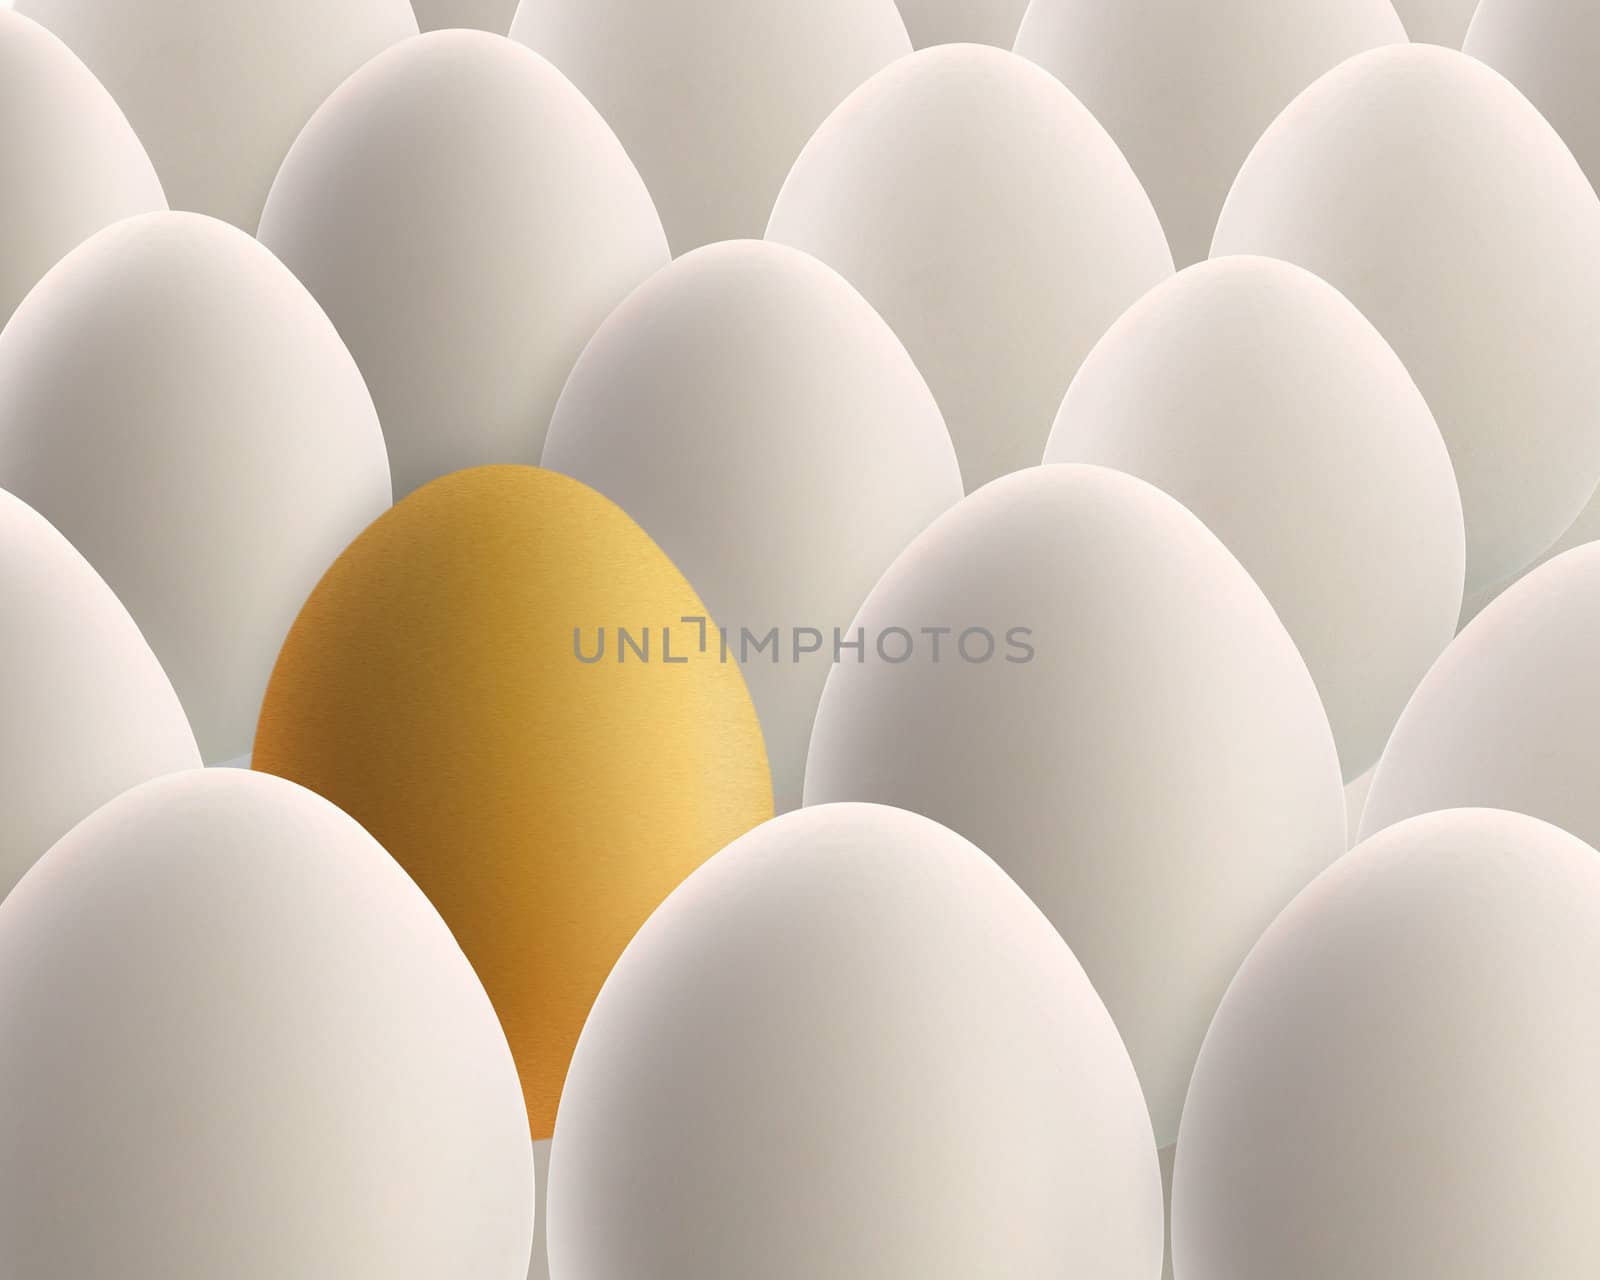 unique golden egg between white eggs by designsstock